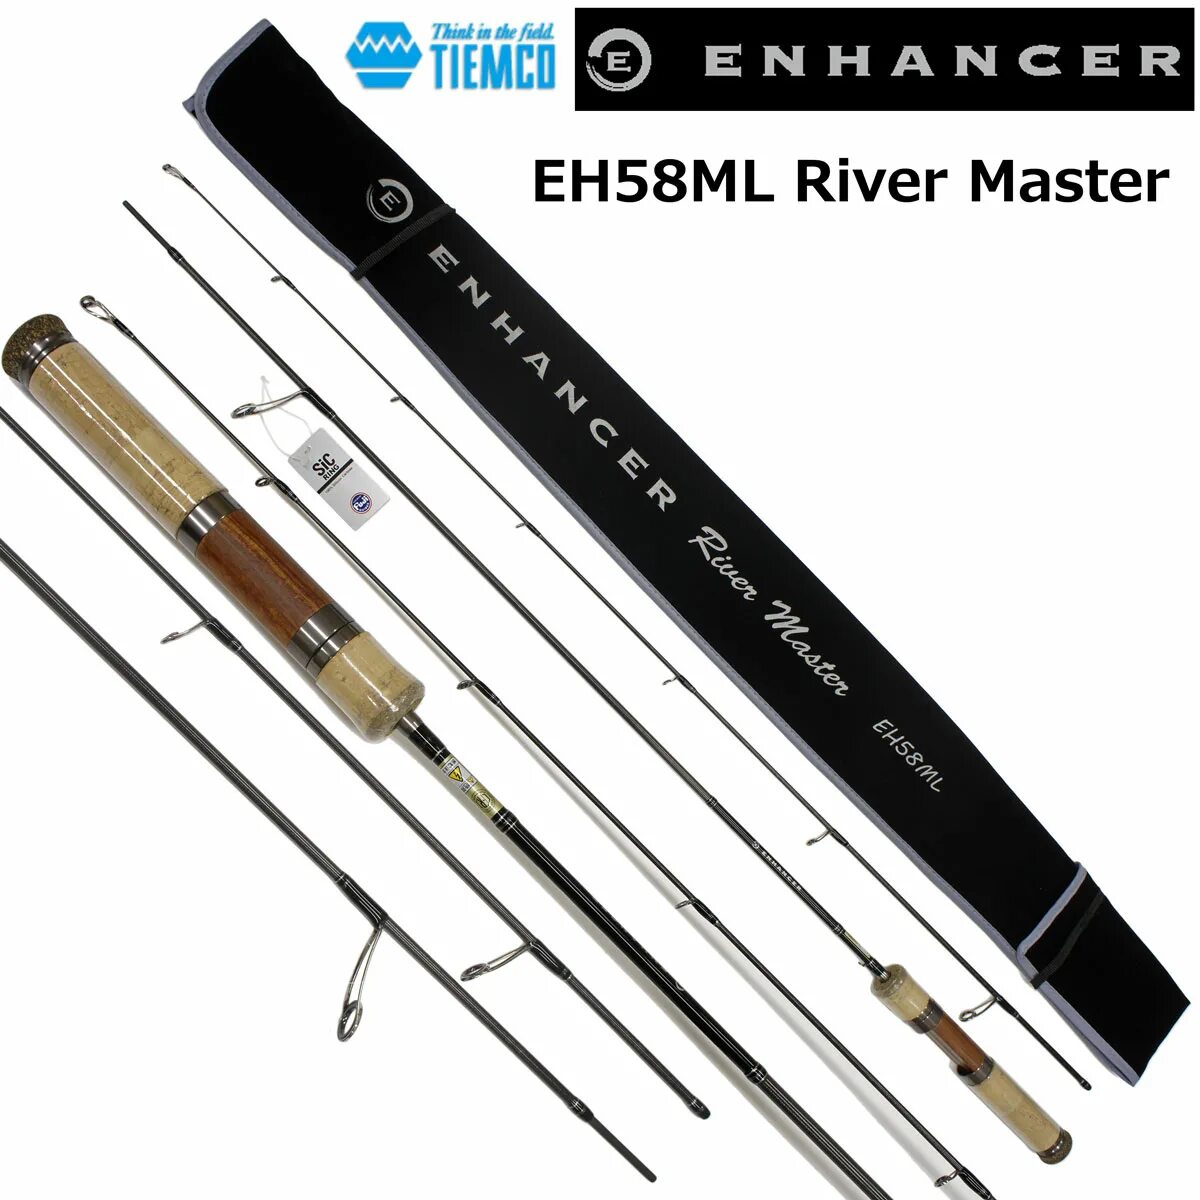 River master. Enhancer спиннинг. Спиннинг Tiemco Enhancer e53l-2. Спиннинг Ривер мастер. Tiemco Enhancer Catalyst 48ul.